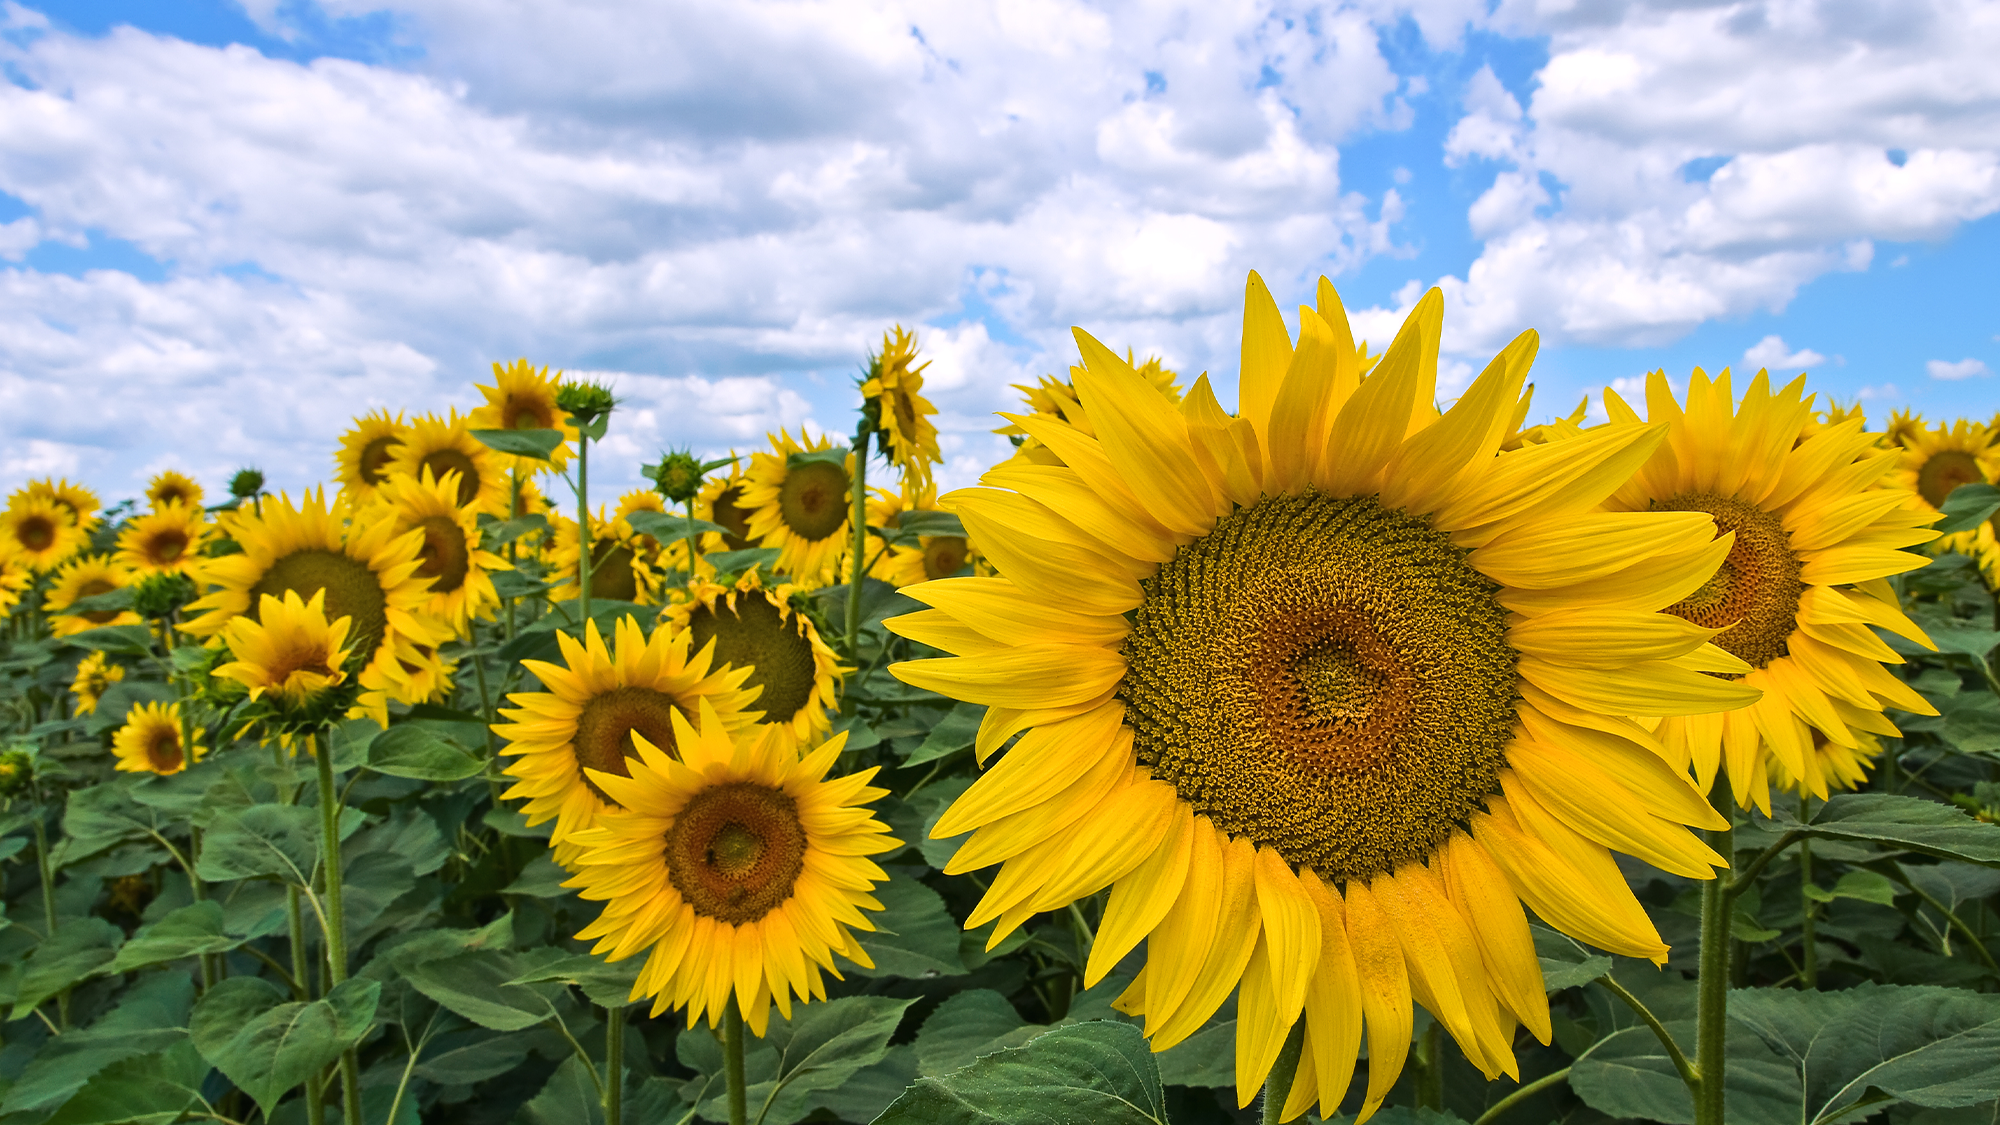 We still don’t fully know how sunflowers turn toward the sun